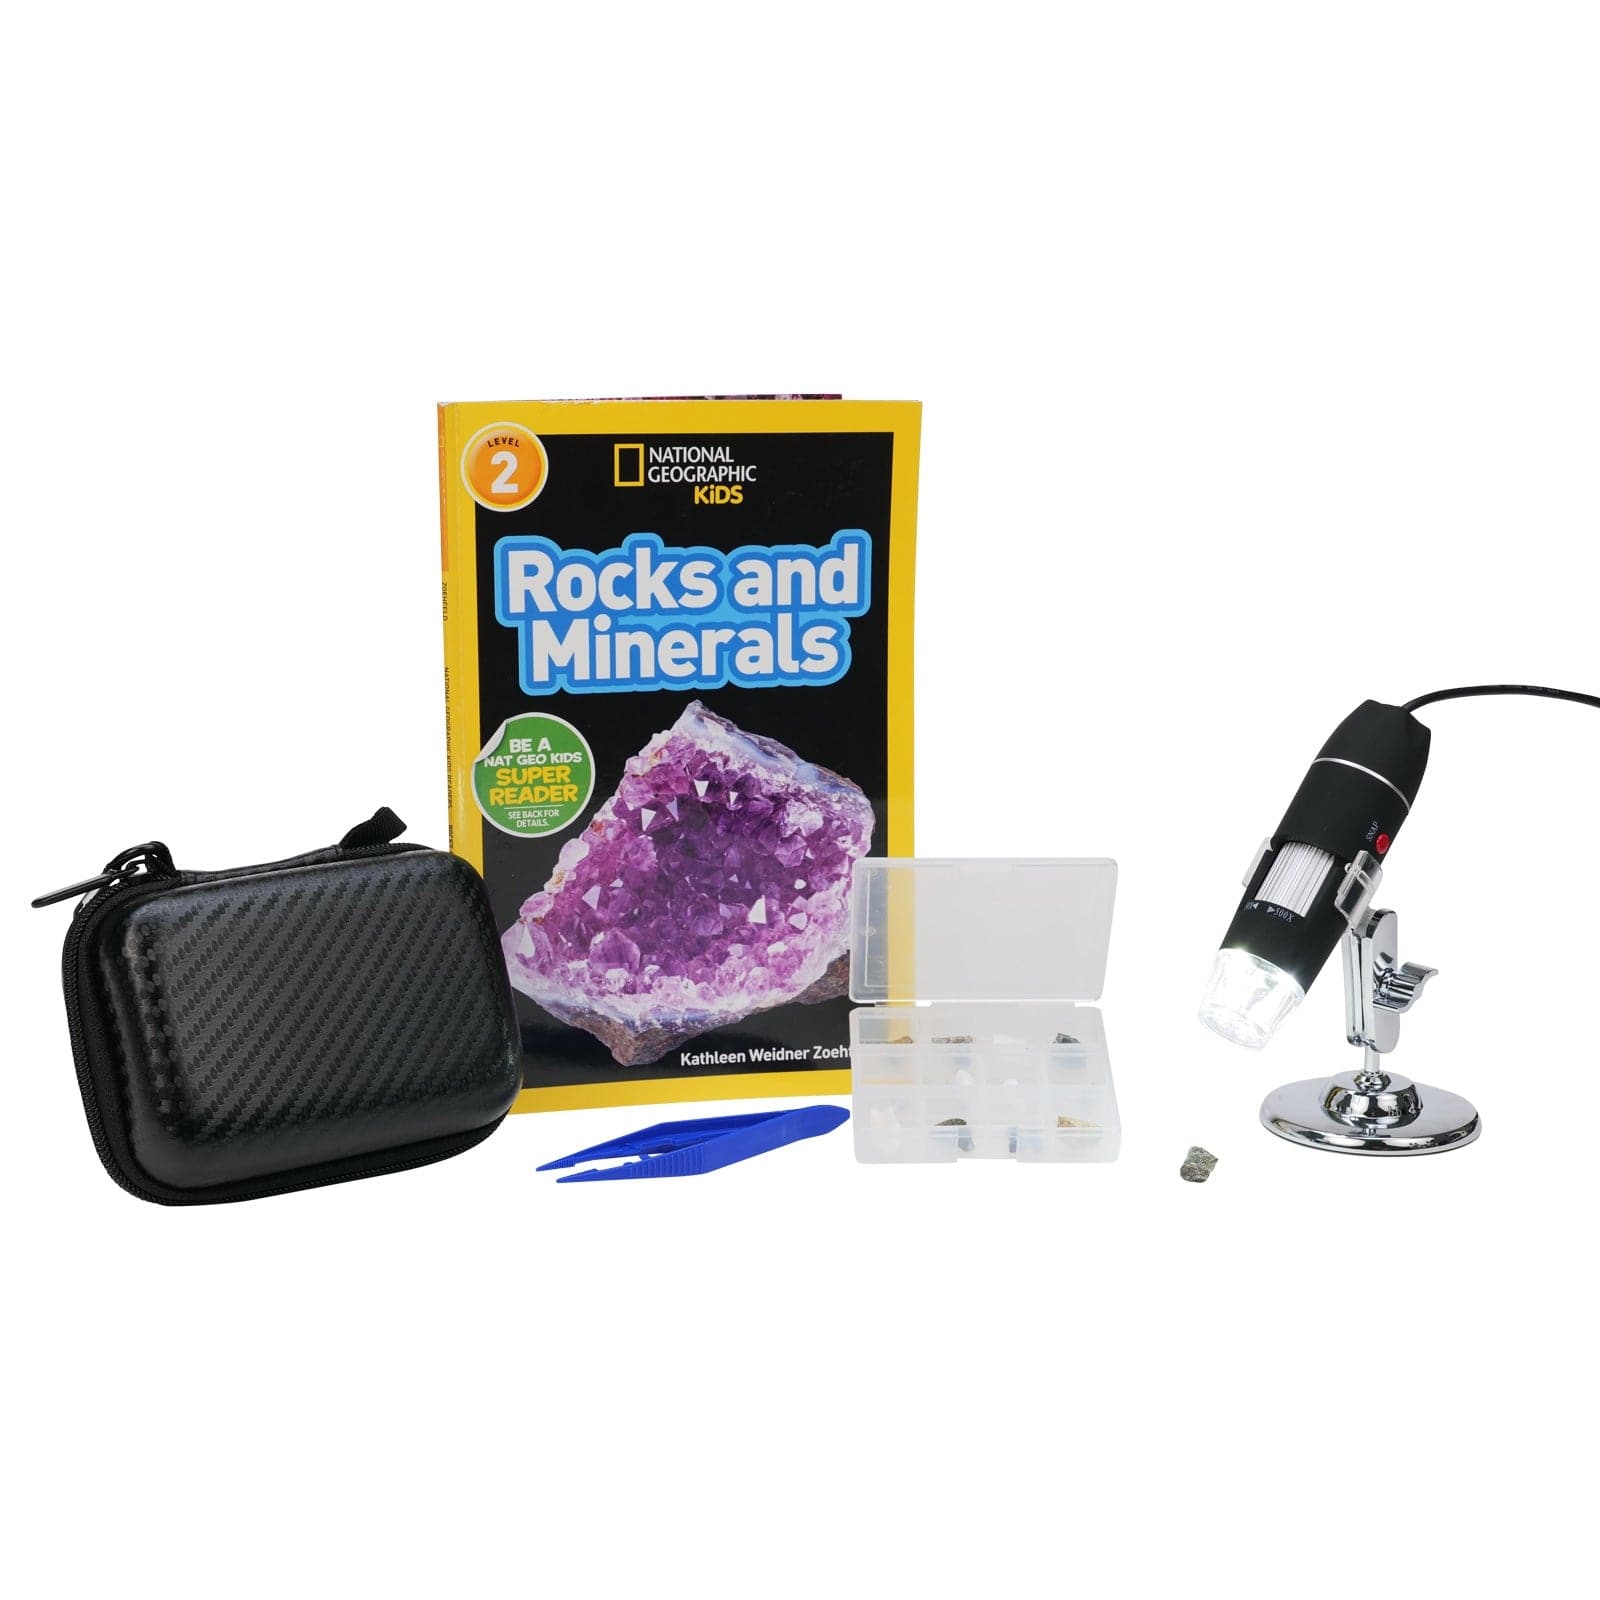 50X-500X 0.3MP Handheld Multi-USB Digital Microscope with LED